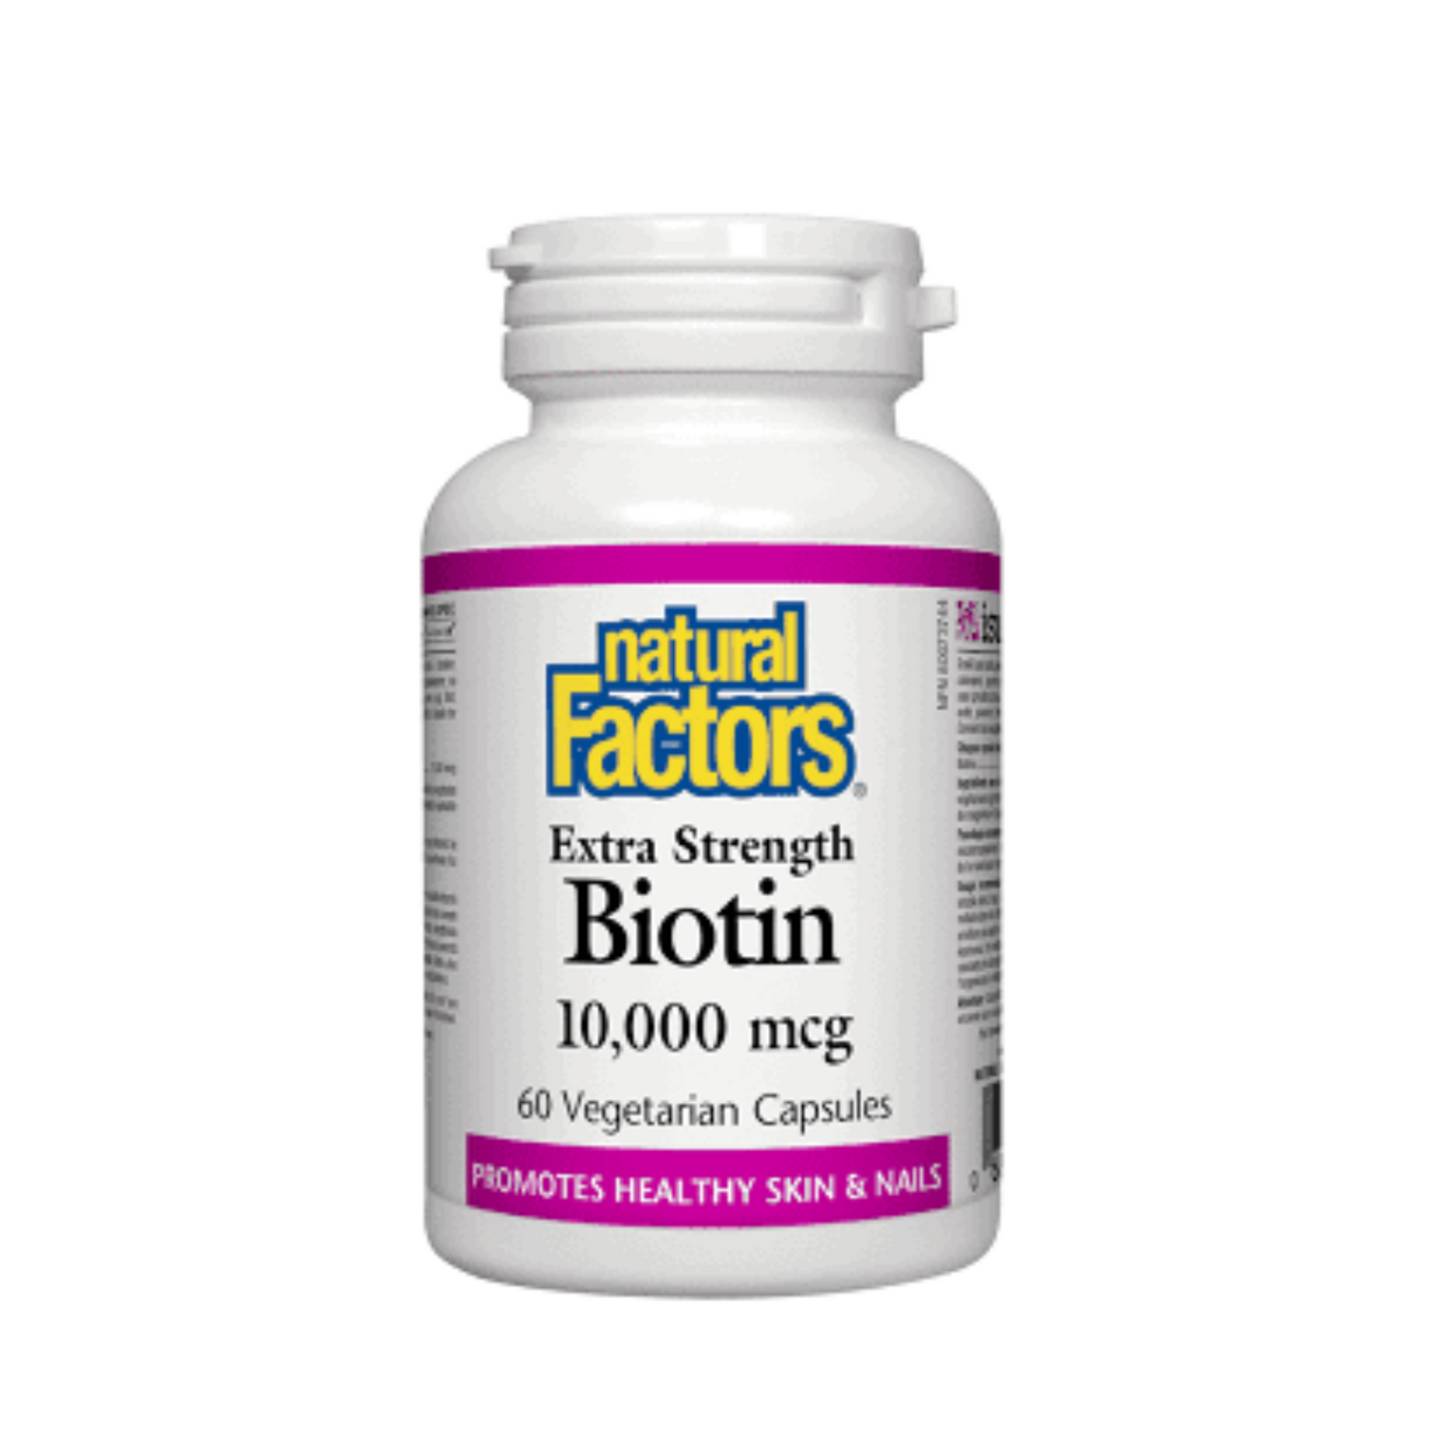 Natural Factors Natural Factors Biotin 10,000